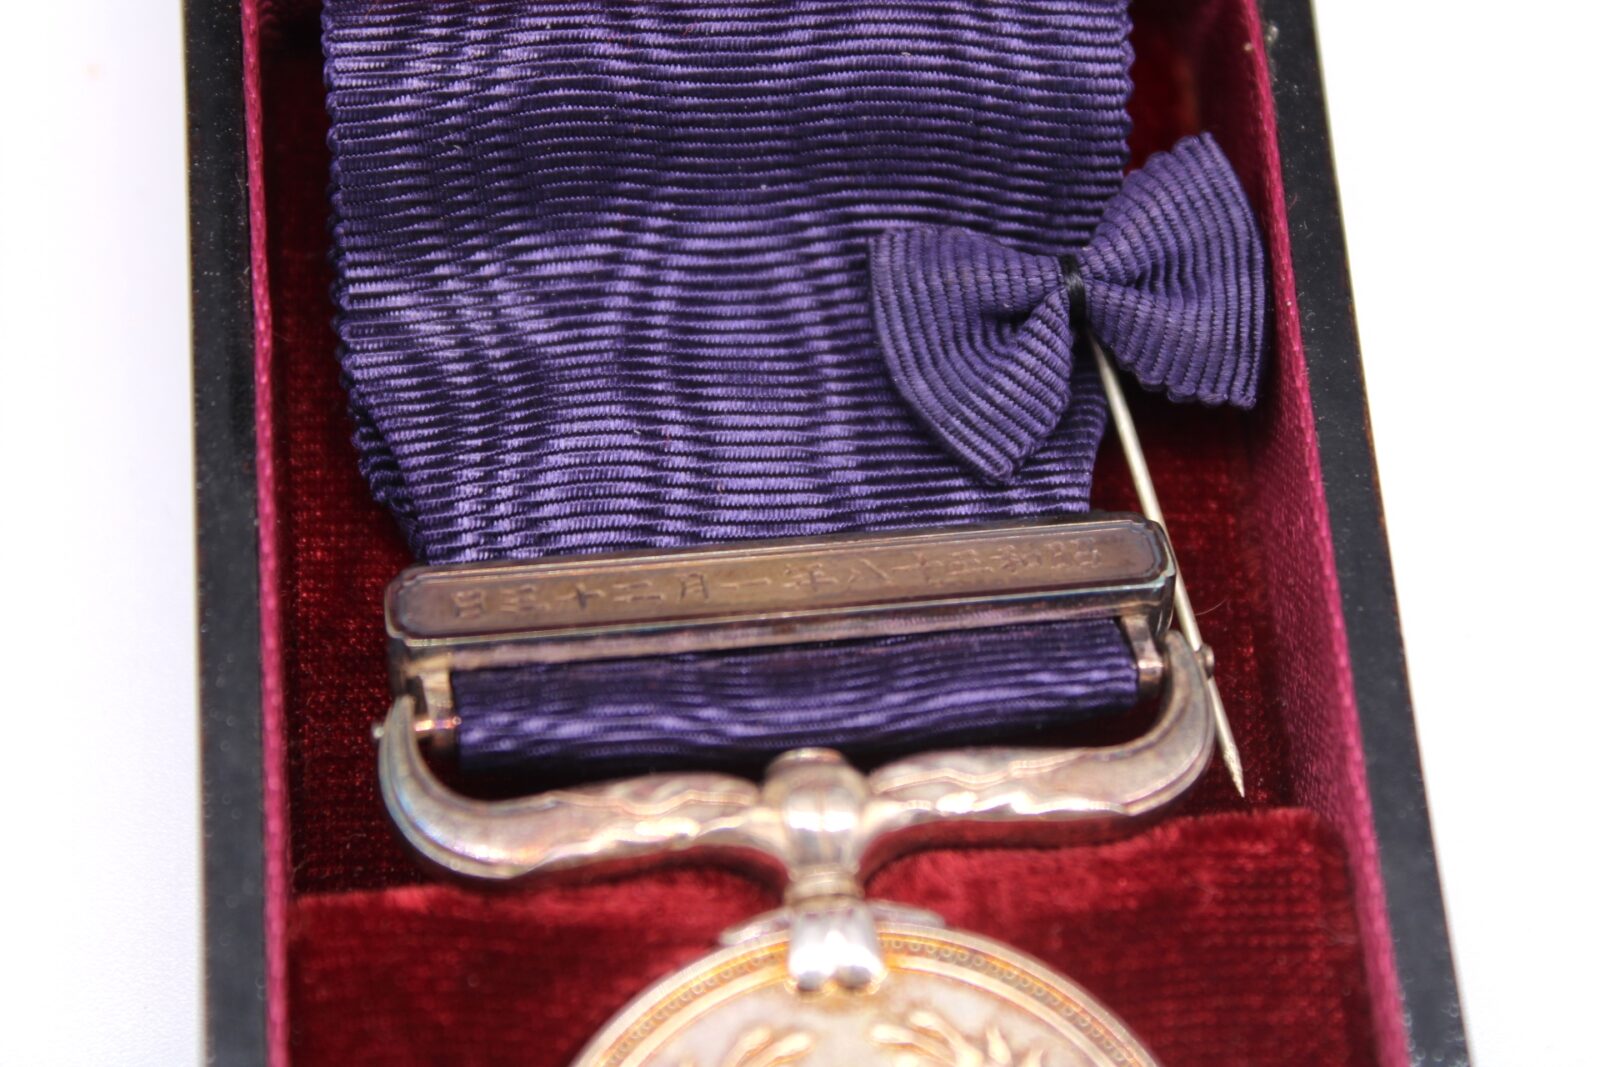 Medal of Honor - Dark Blue Ribbon (Cased) (1963) - Wolfgang Historica